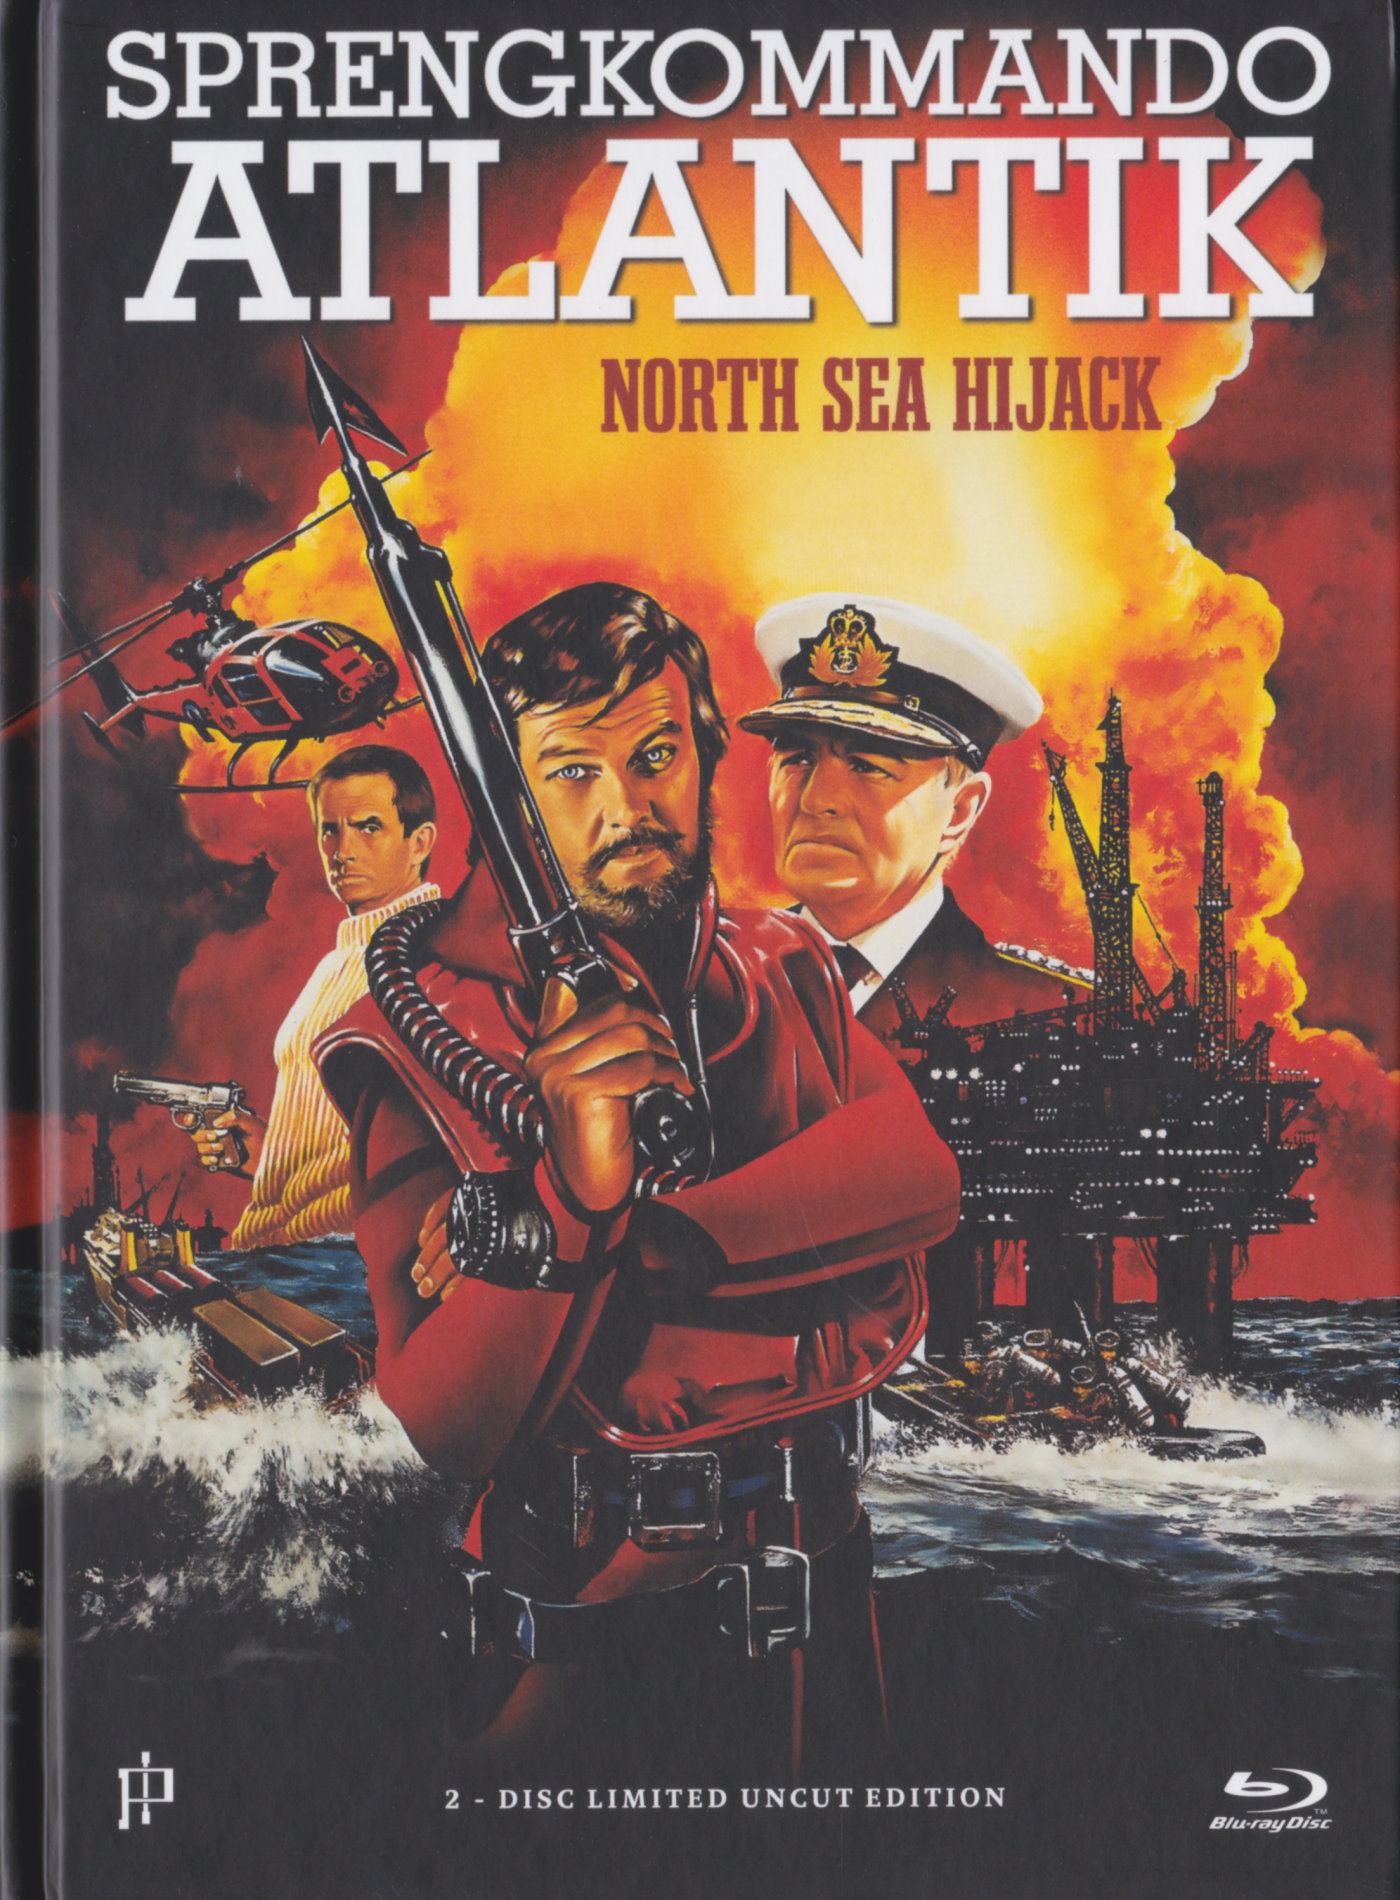 Cover - Sprengkommando Atlantik.jpg